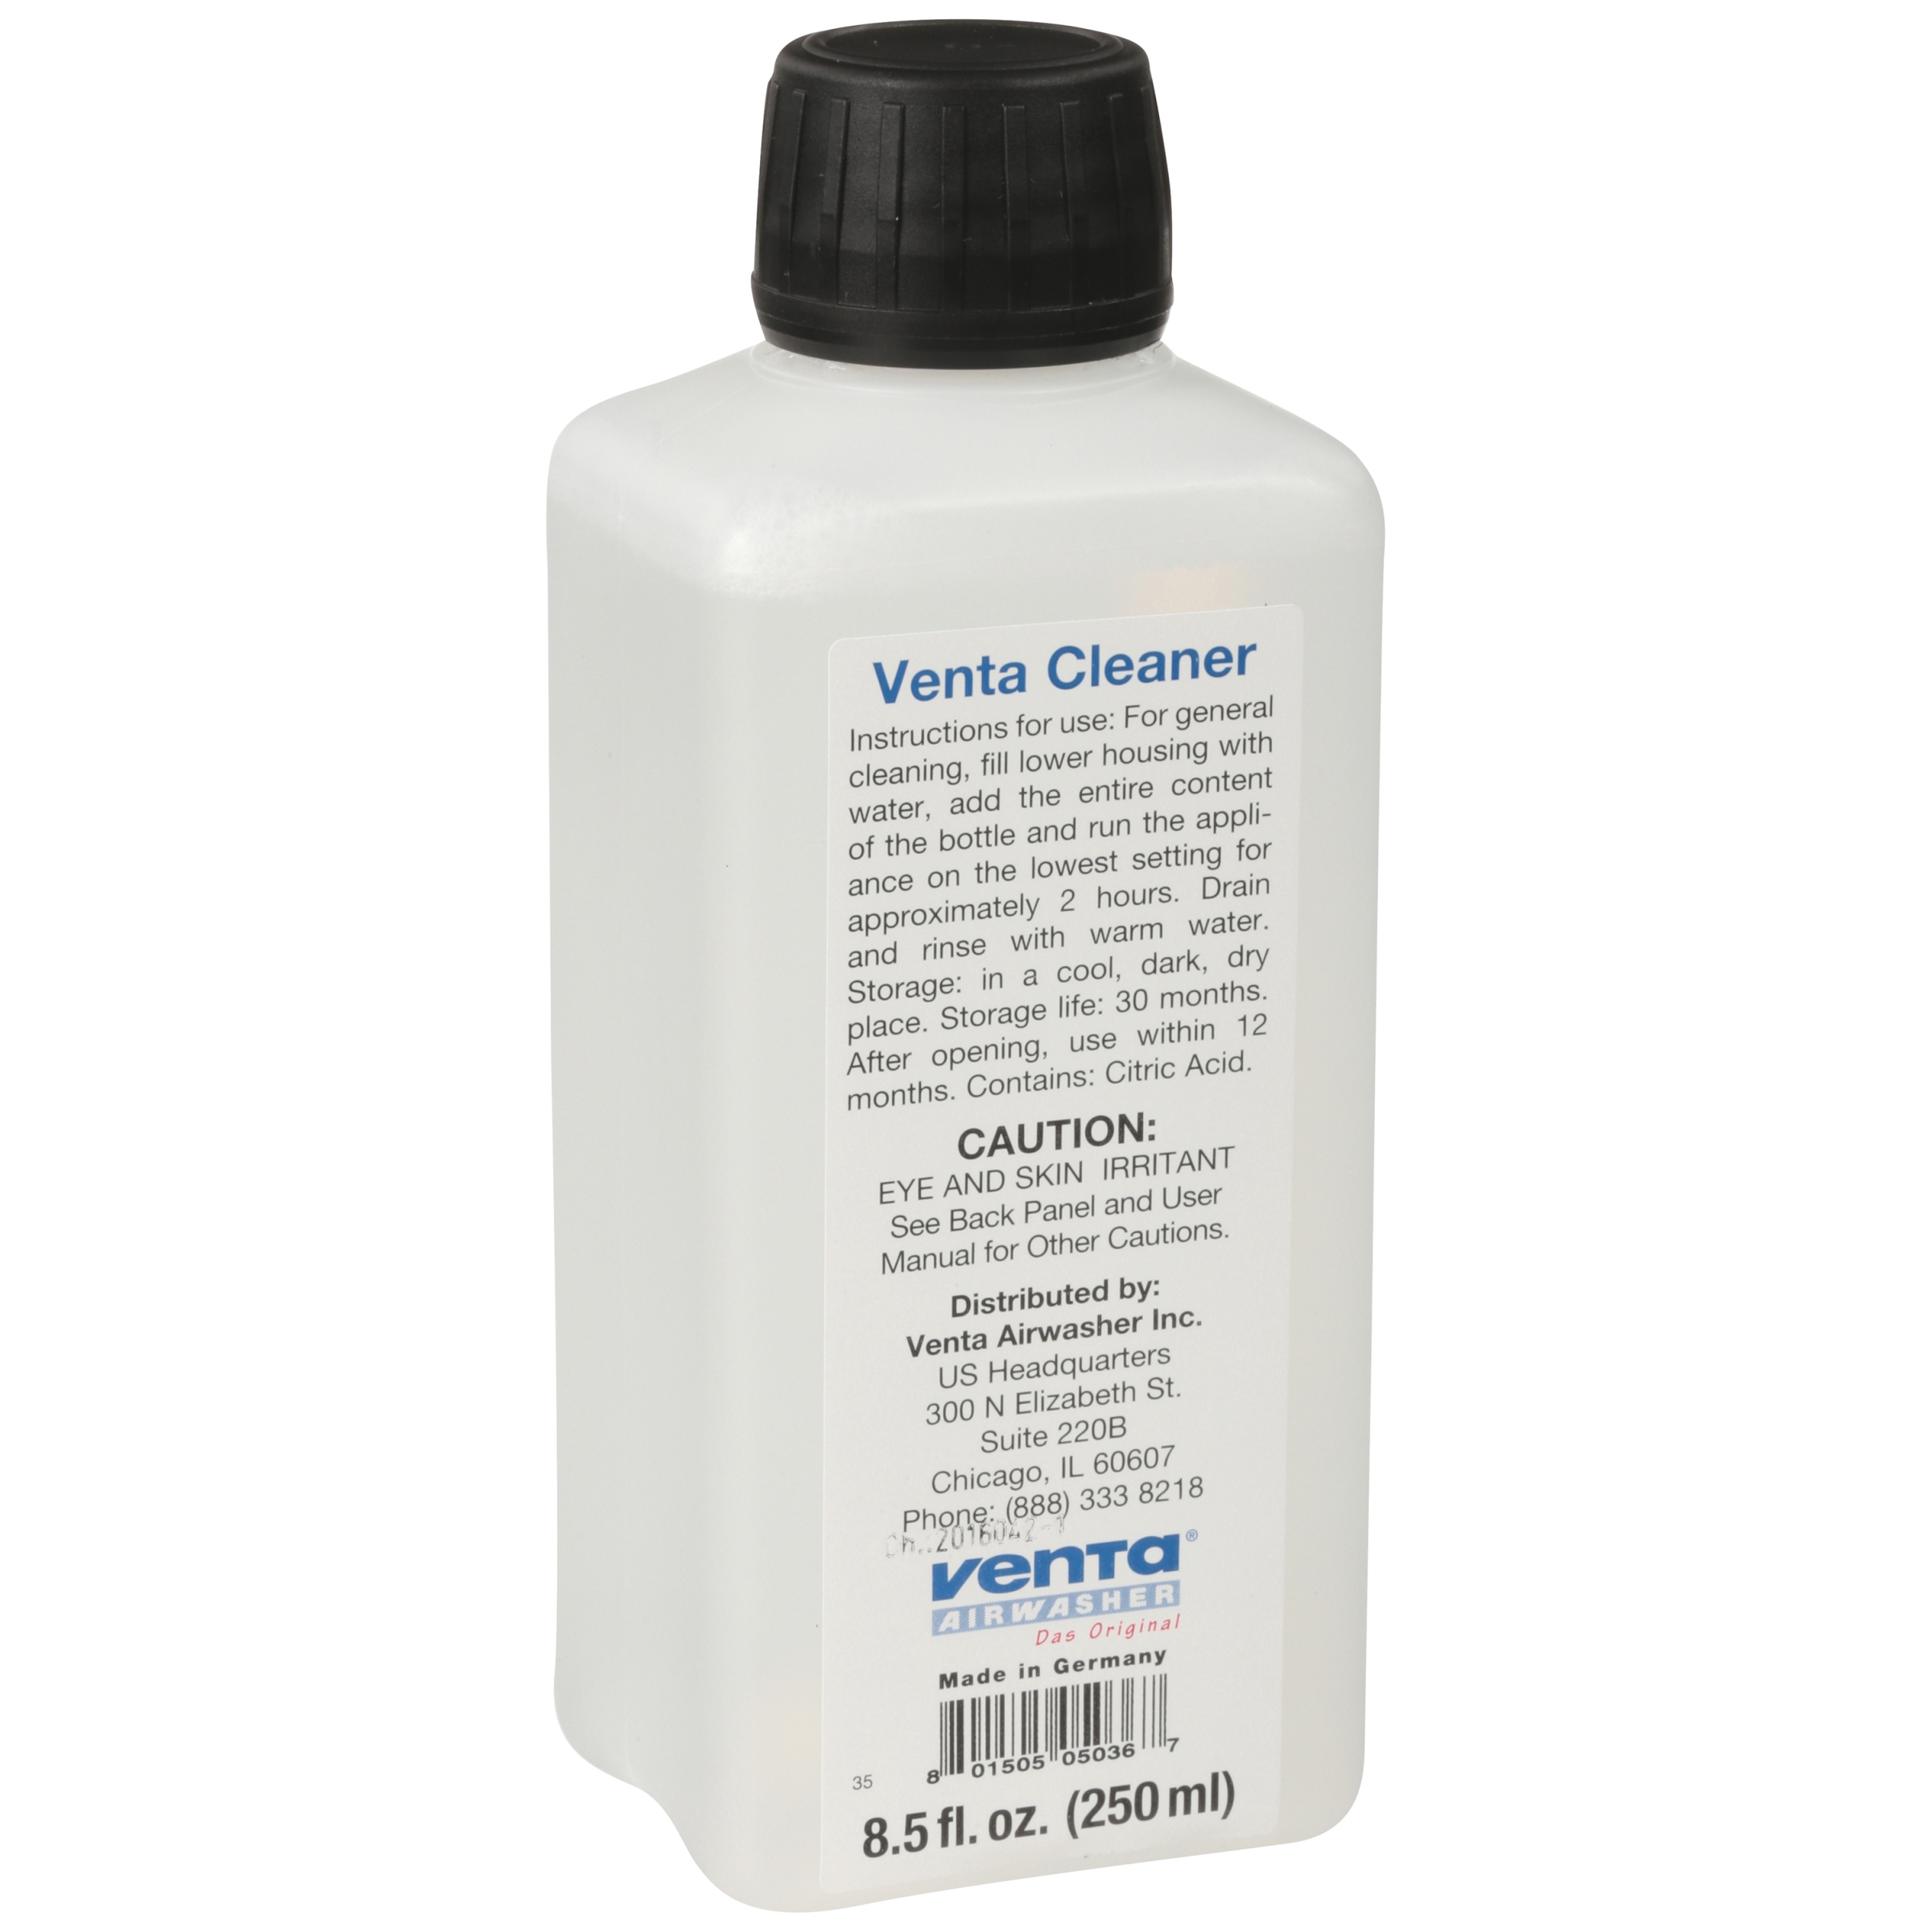 Venta Airwasher Cleaner - image 1 of 2